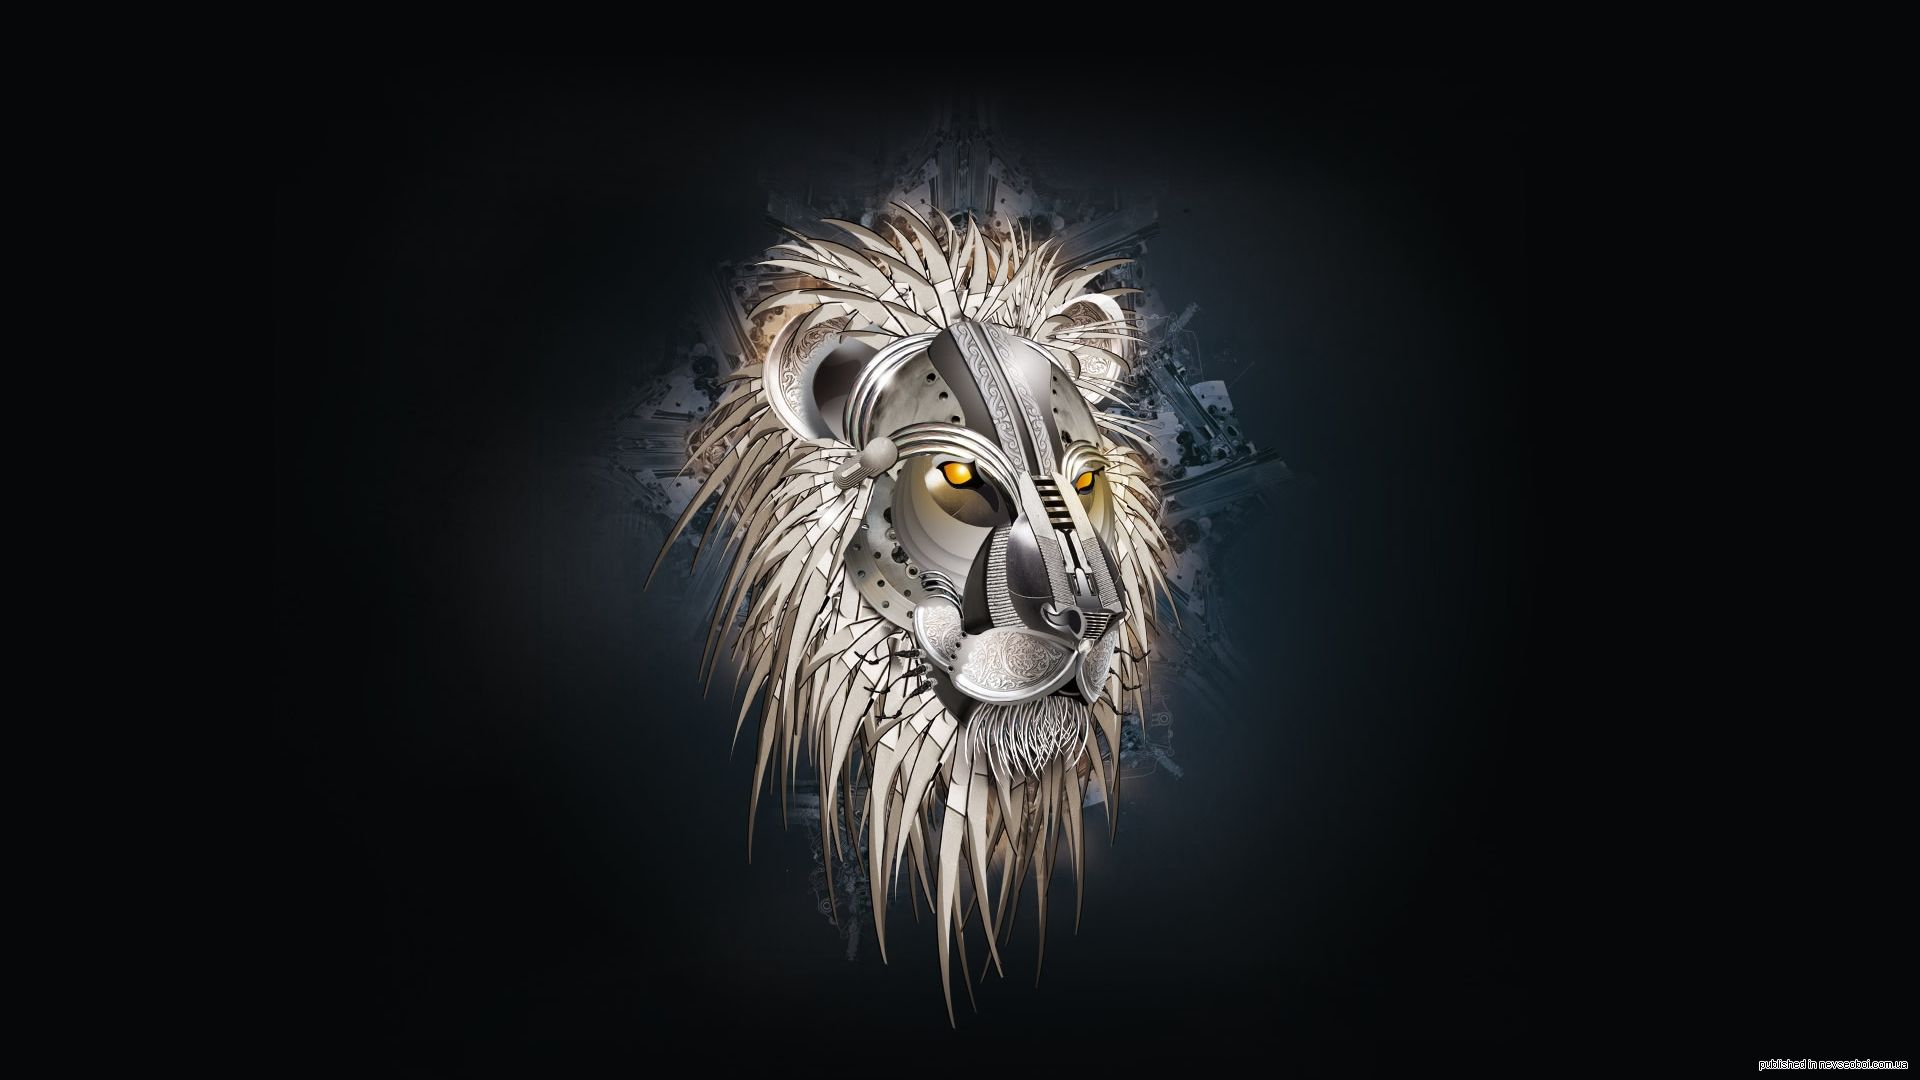 Black Lion Wallpaper - Desktop Backgrounds